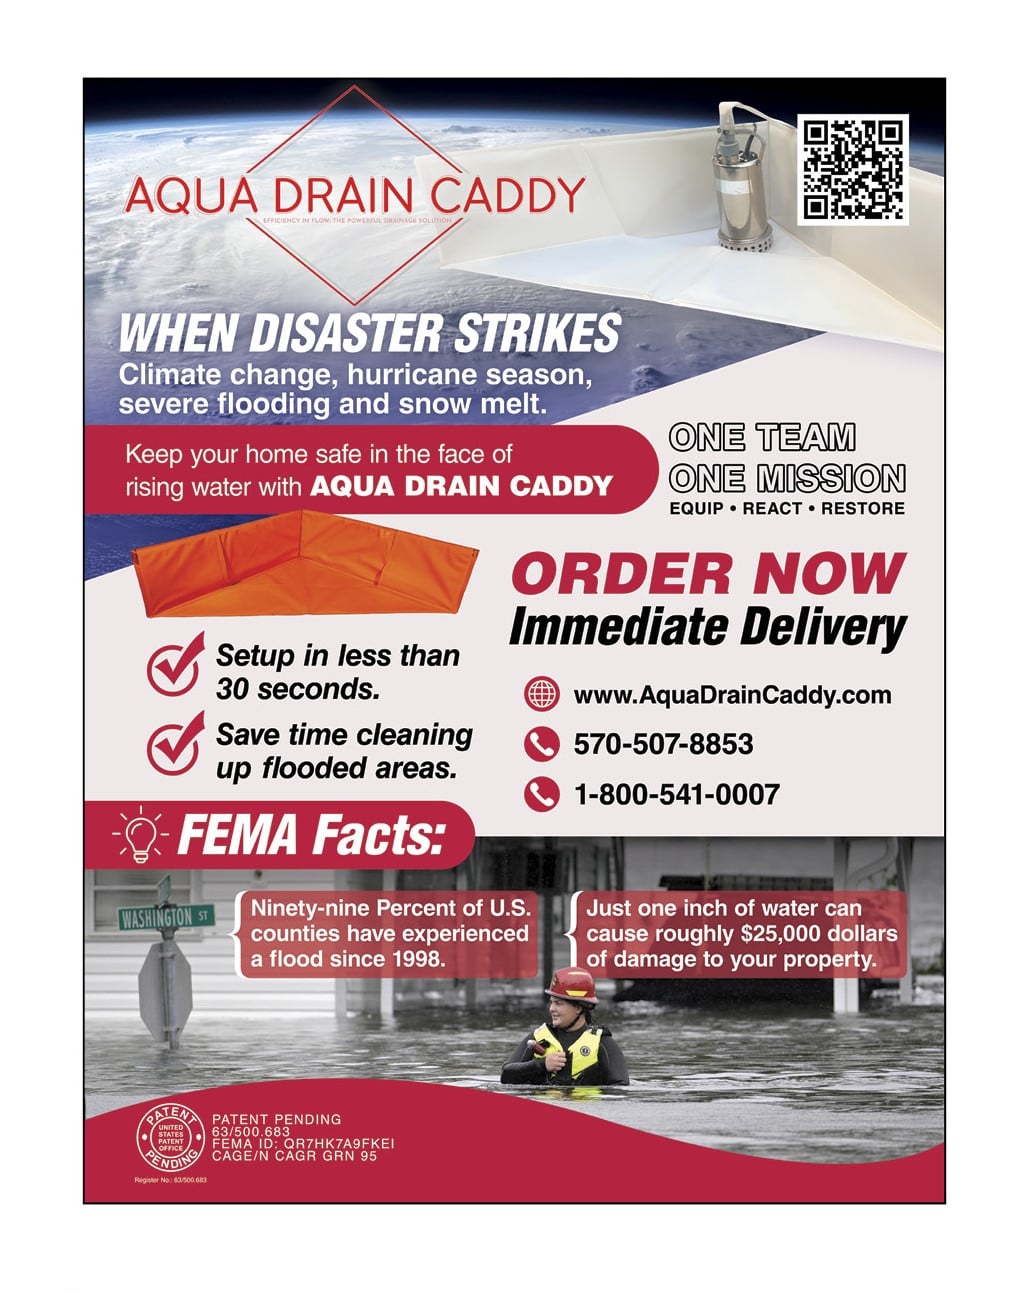 Aqua-Drain-Caddy-Disaster-Expo